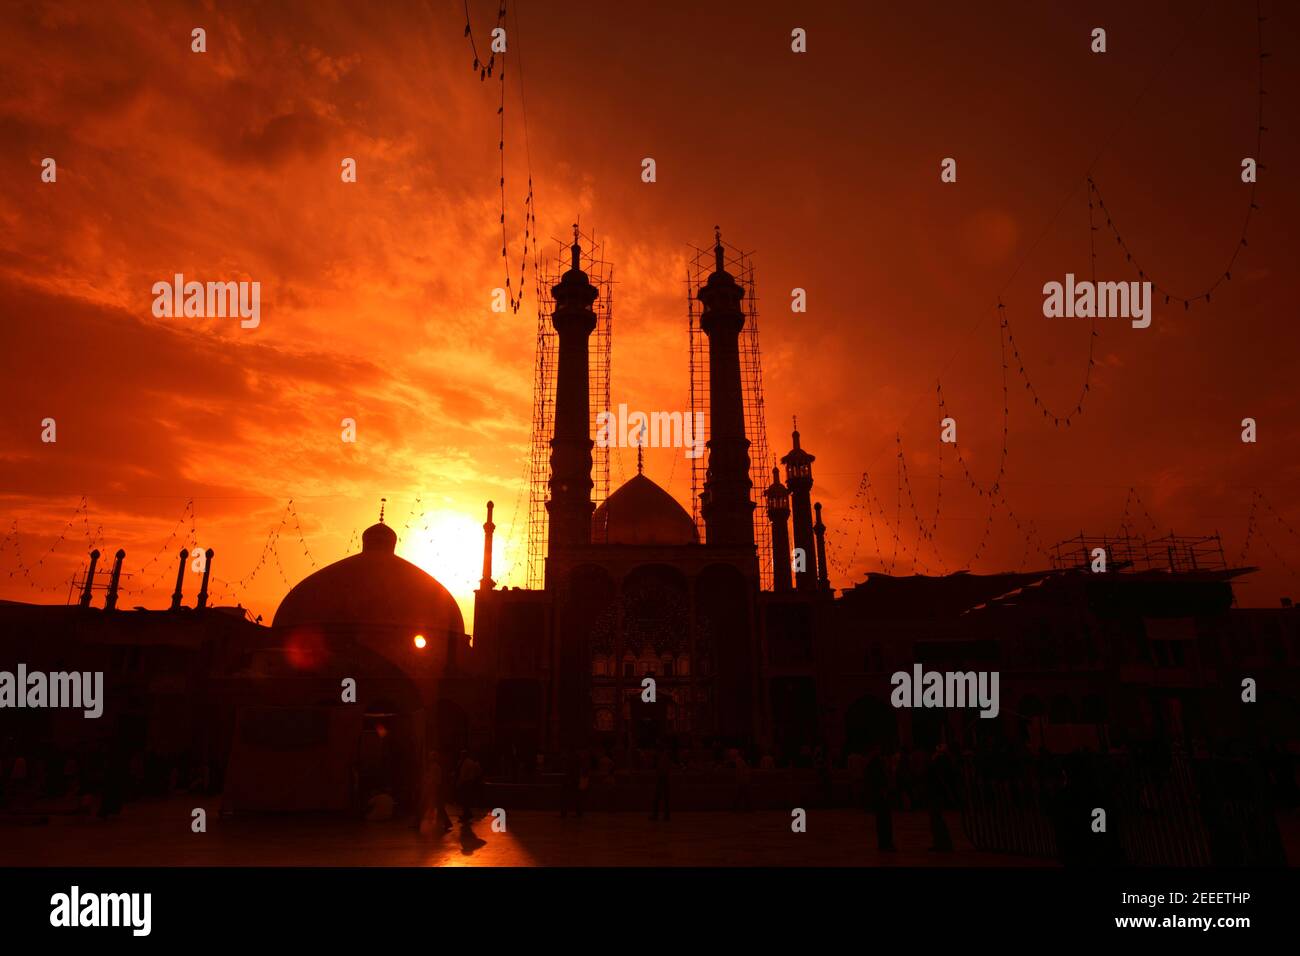 Das Heiligtum von Fatima al-Masumeh, Qom, Iran Stockfoto